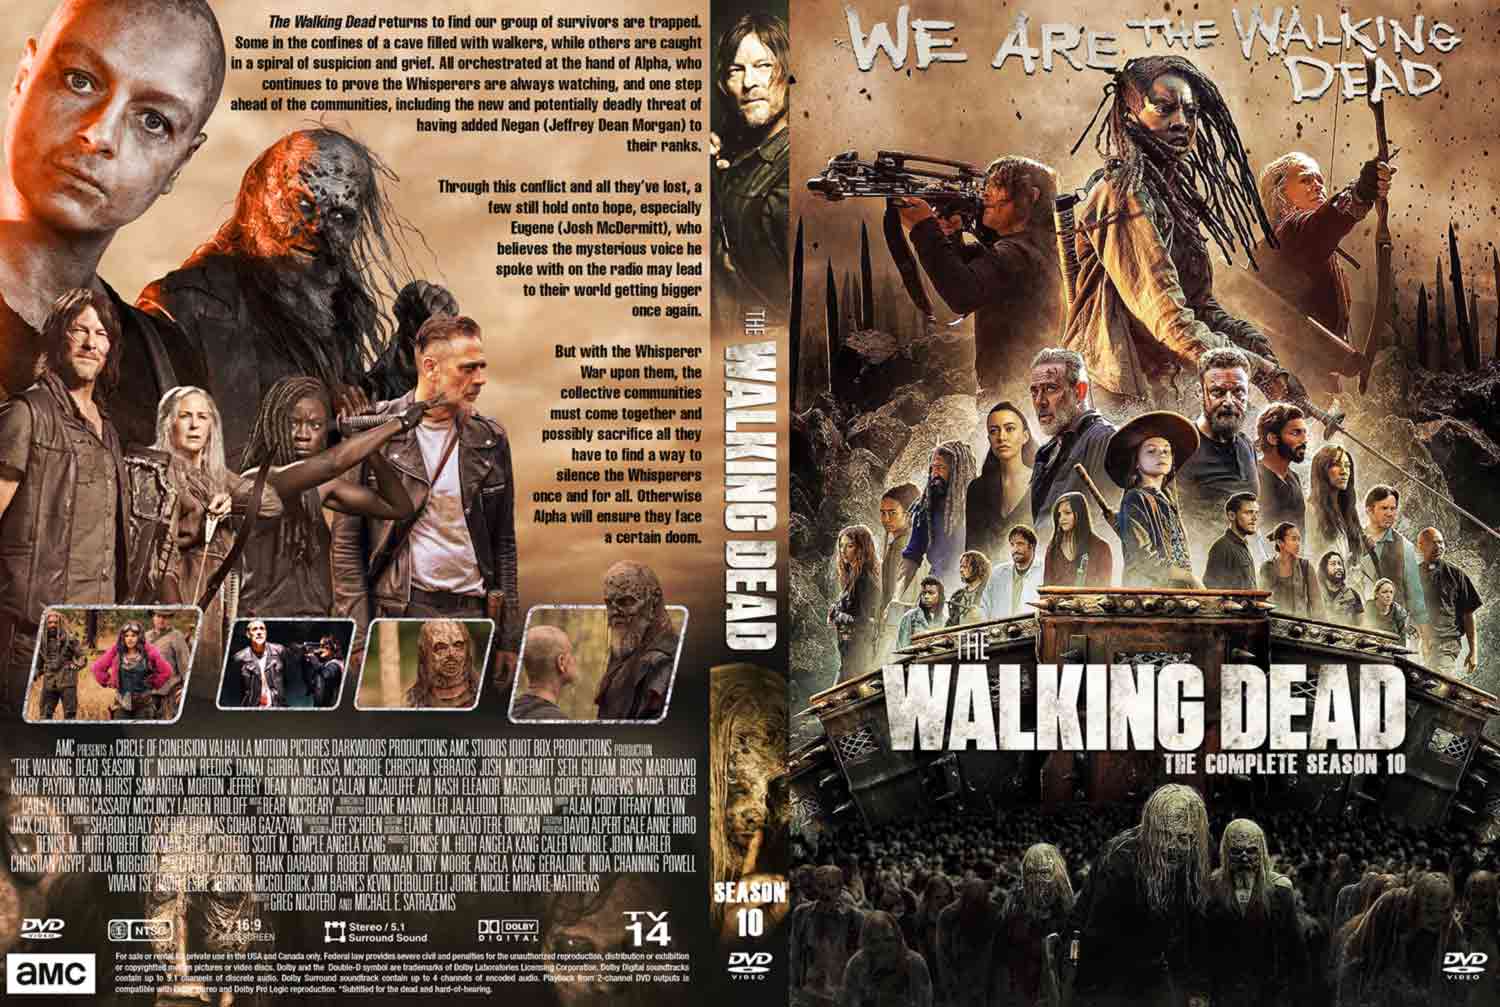 The Walking Dead Season 10 Dvd Cover Cover Addict Free Dvd